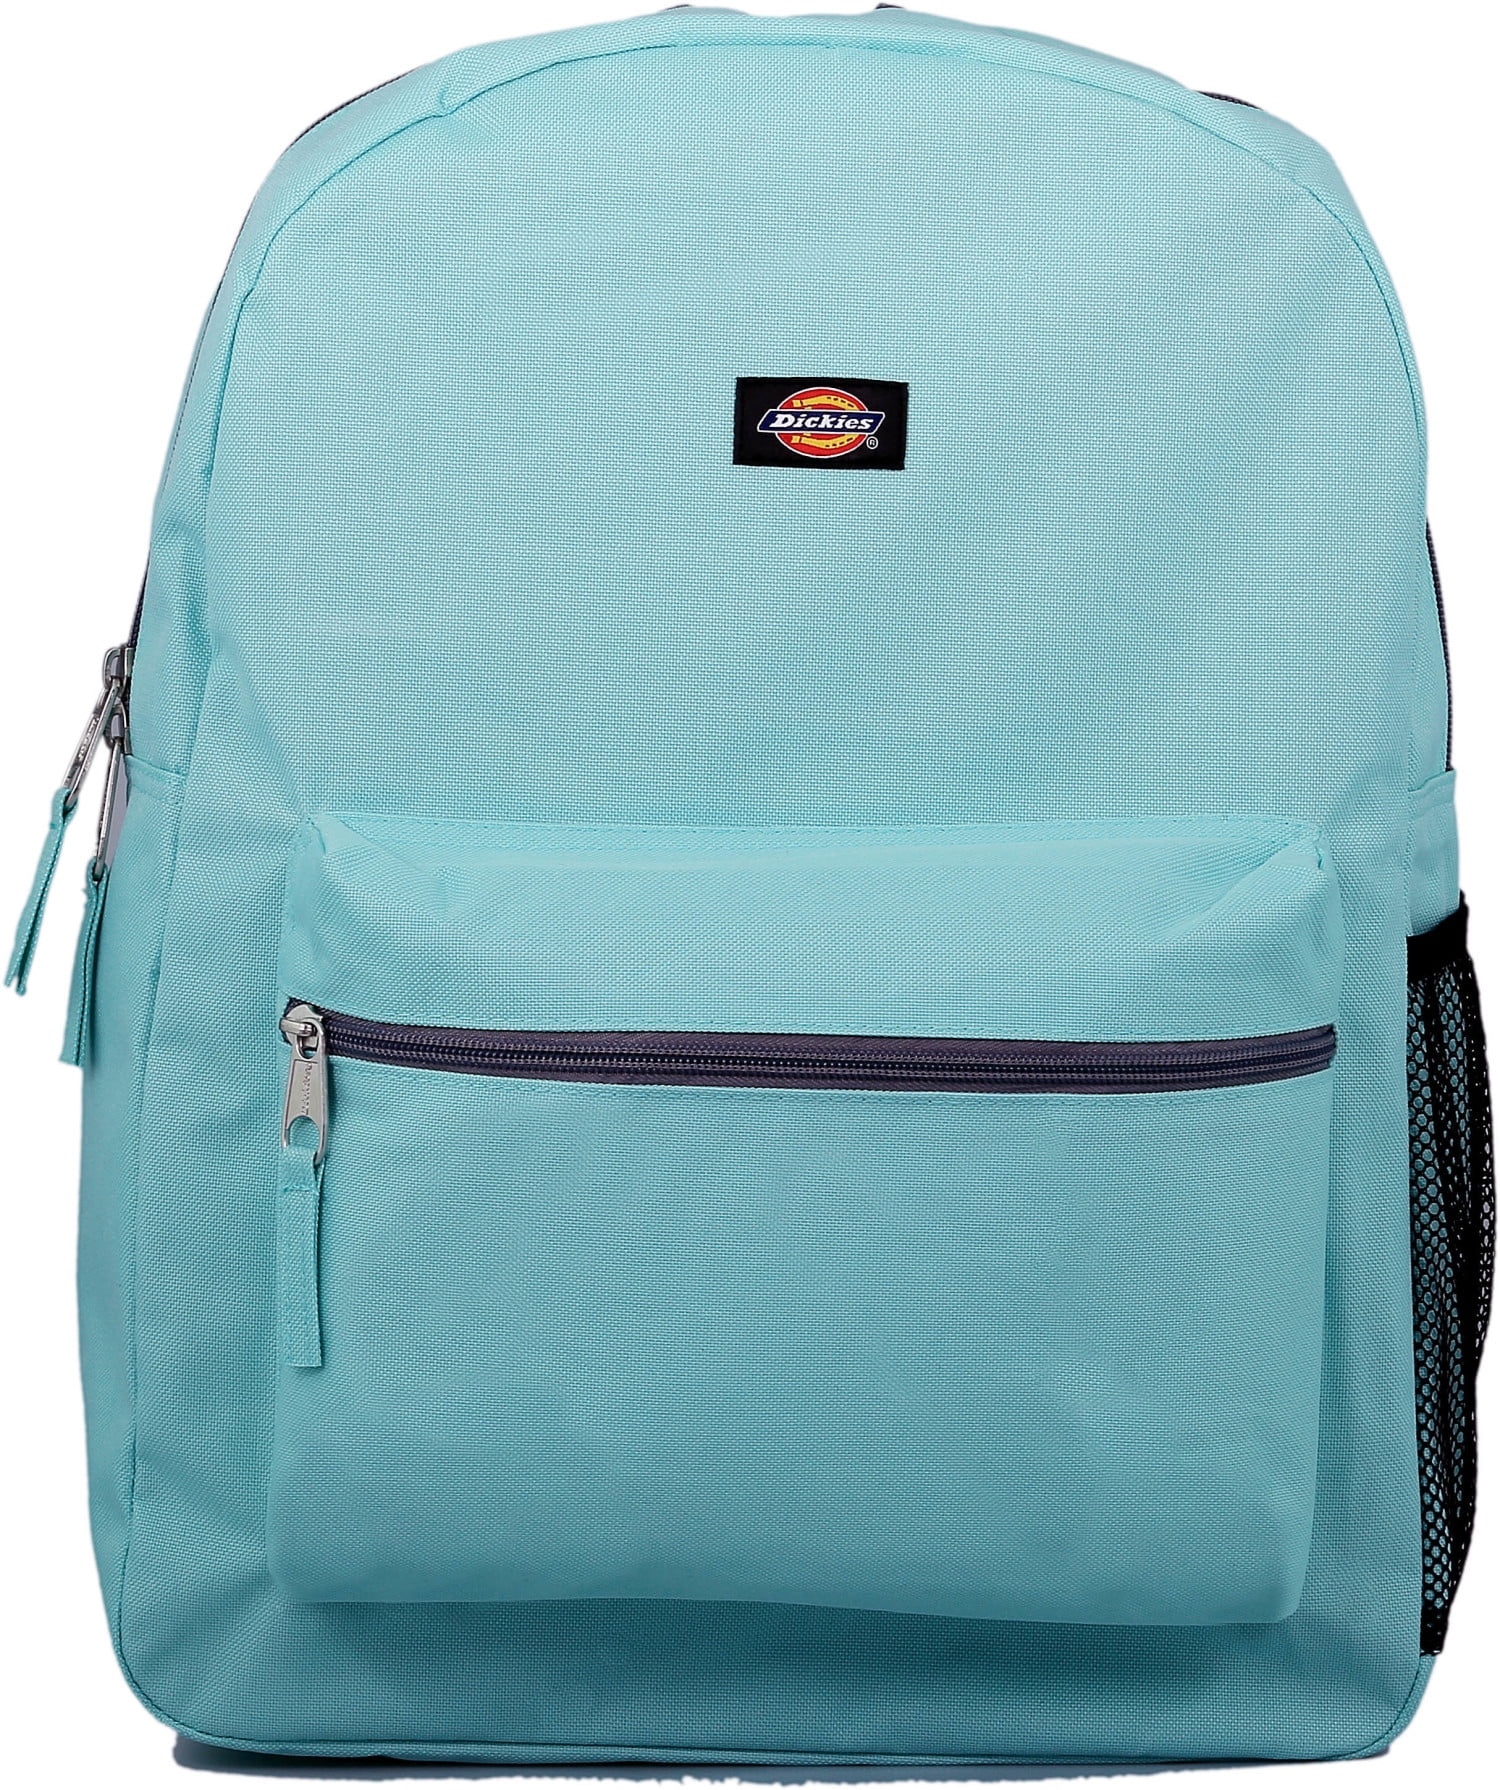 Student Polyester Backpack - Mint Green - Walmart.com